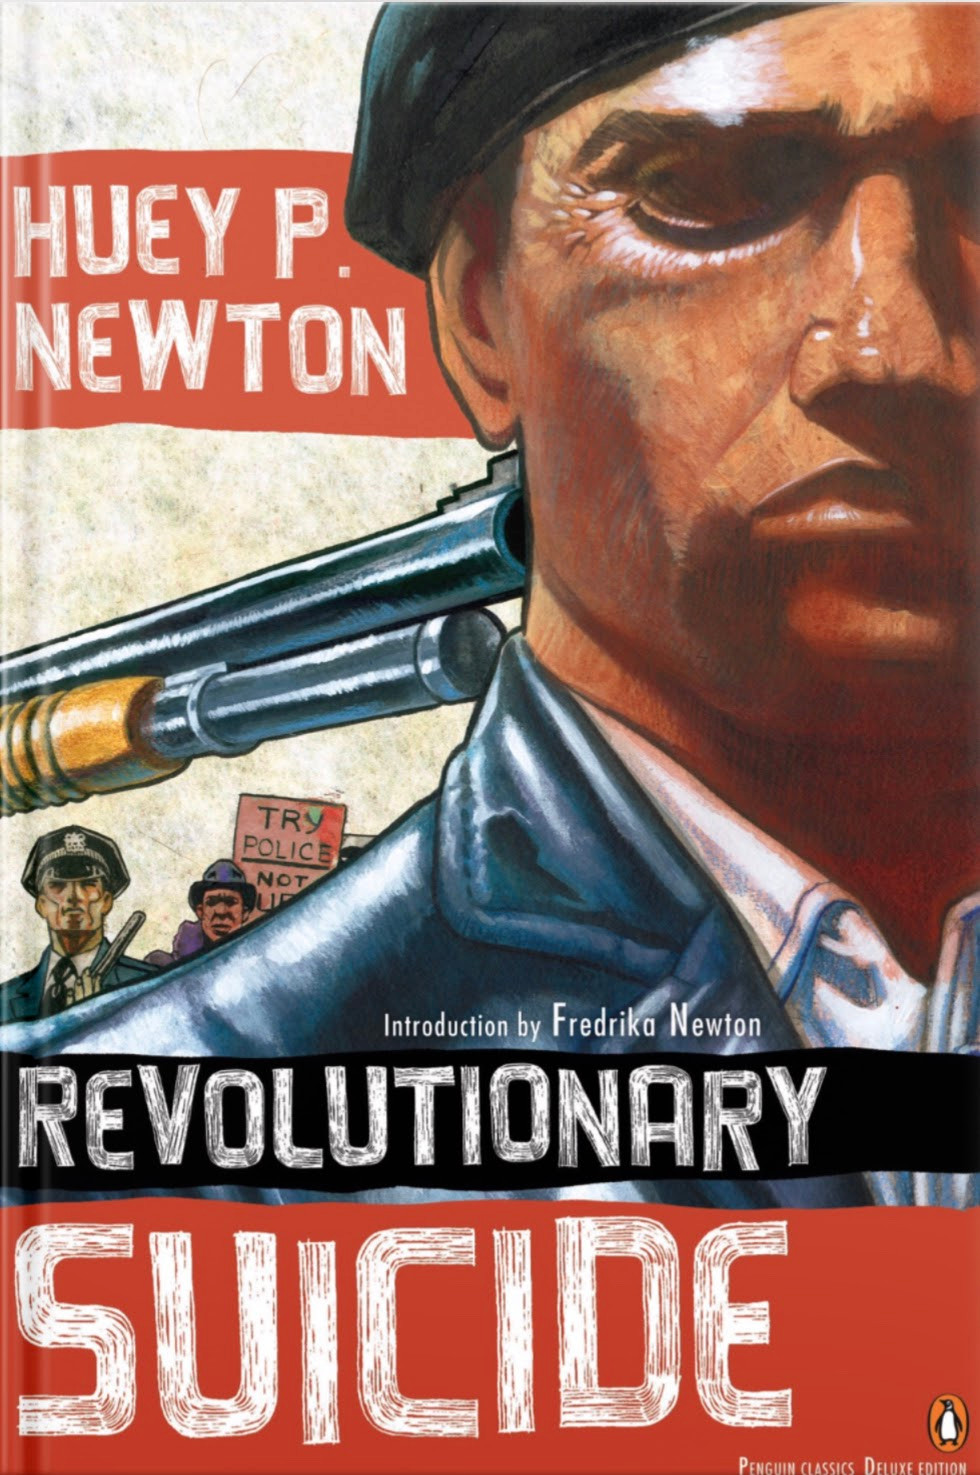 Huey P. Newton: Revolutionary suicide (2009, Penguin Group)